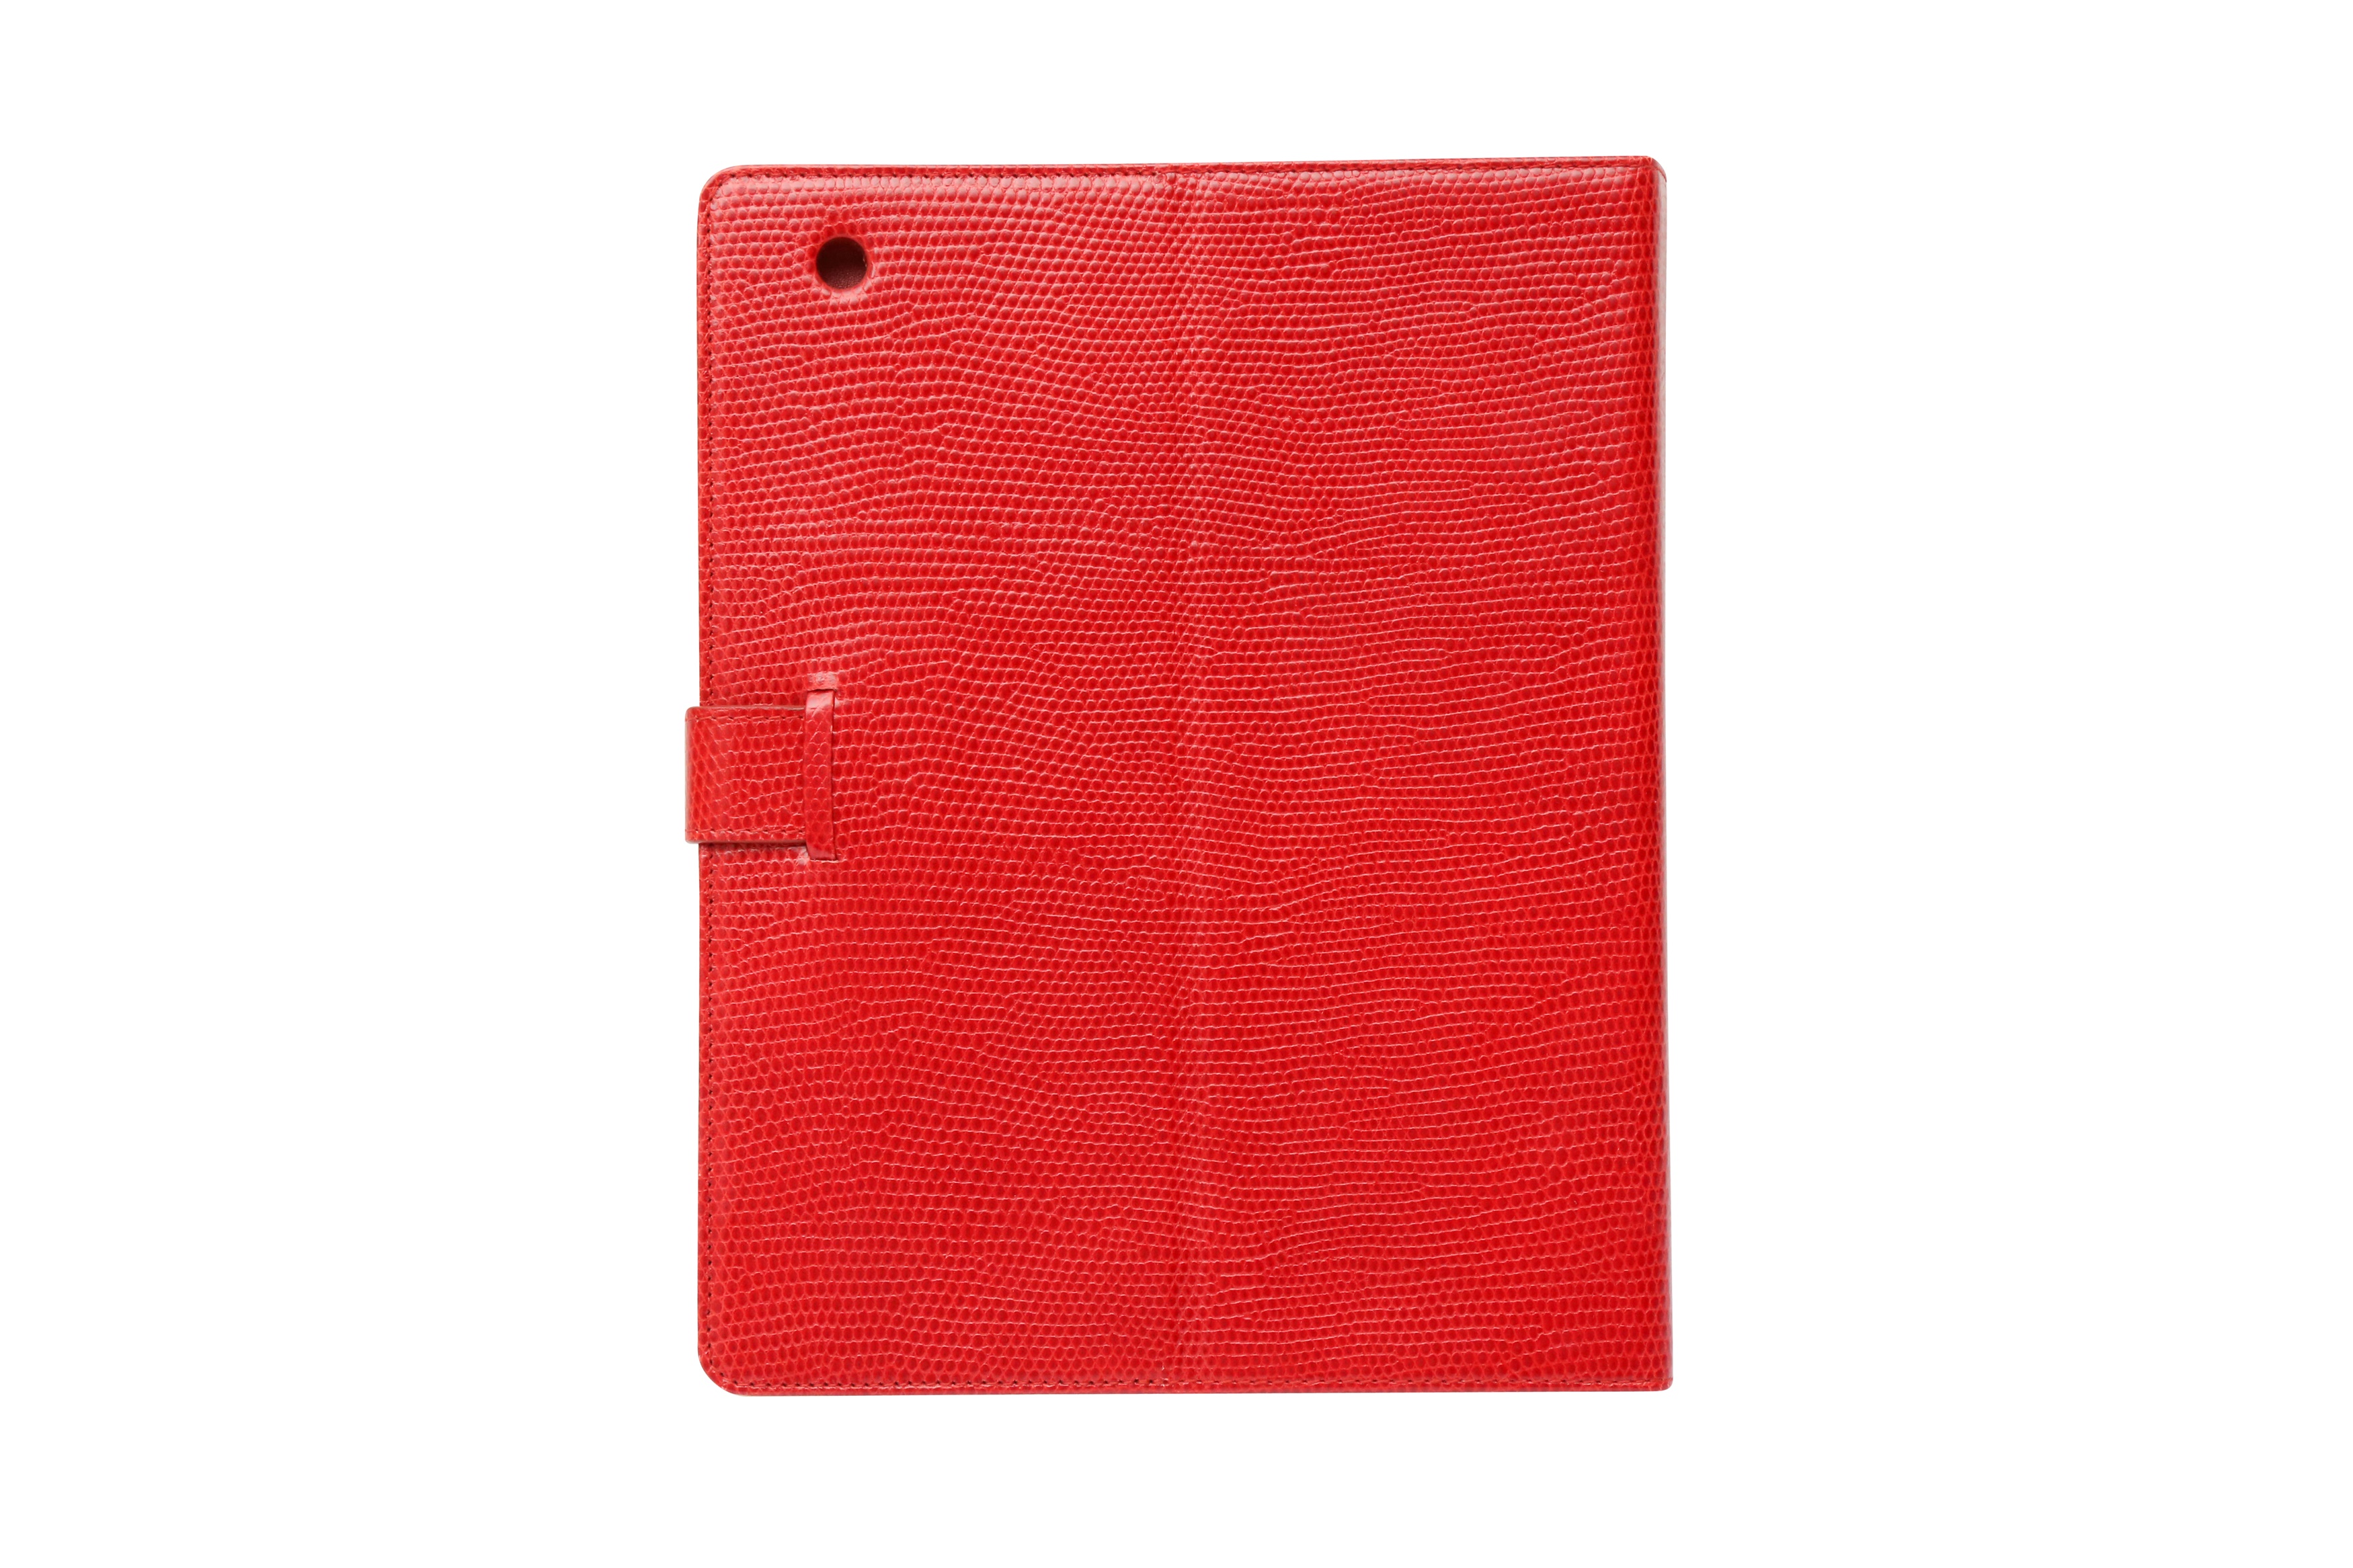 Smythson Red Lizard iPad Case - Image 2 of 3